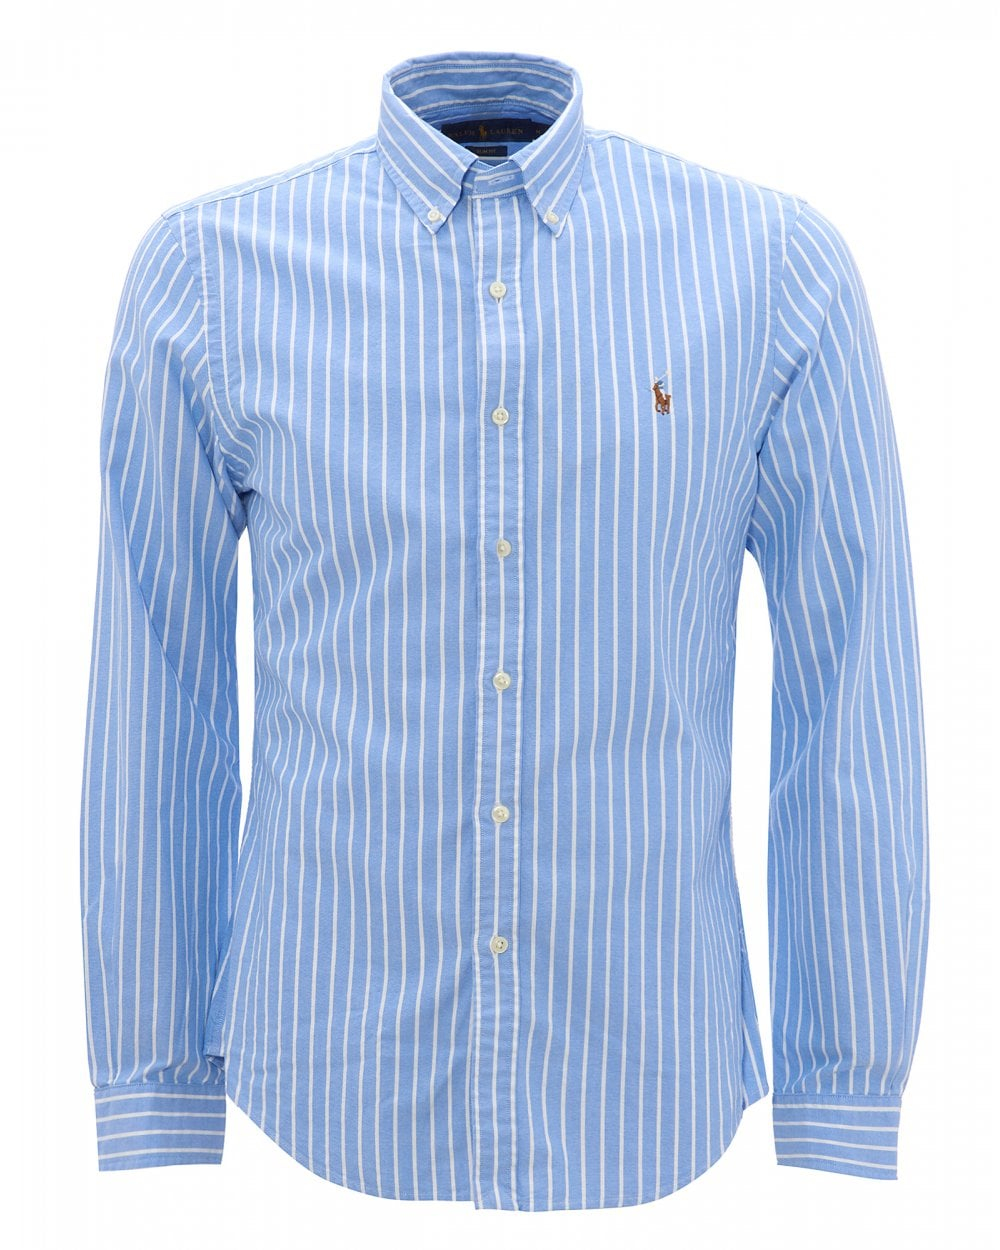 Polo Ralph Lauren Mens Blue Striped Button Down Oxford Shirt - Size ...